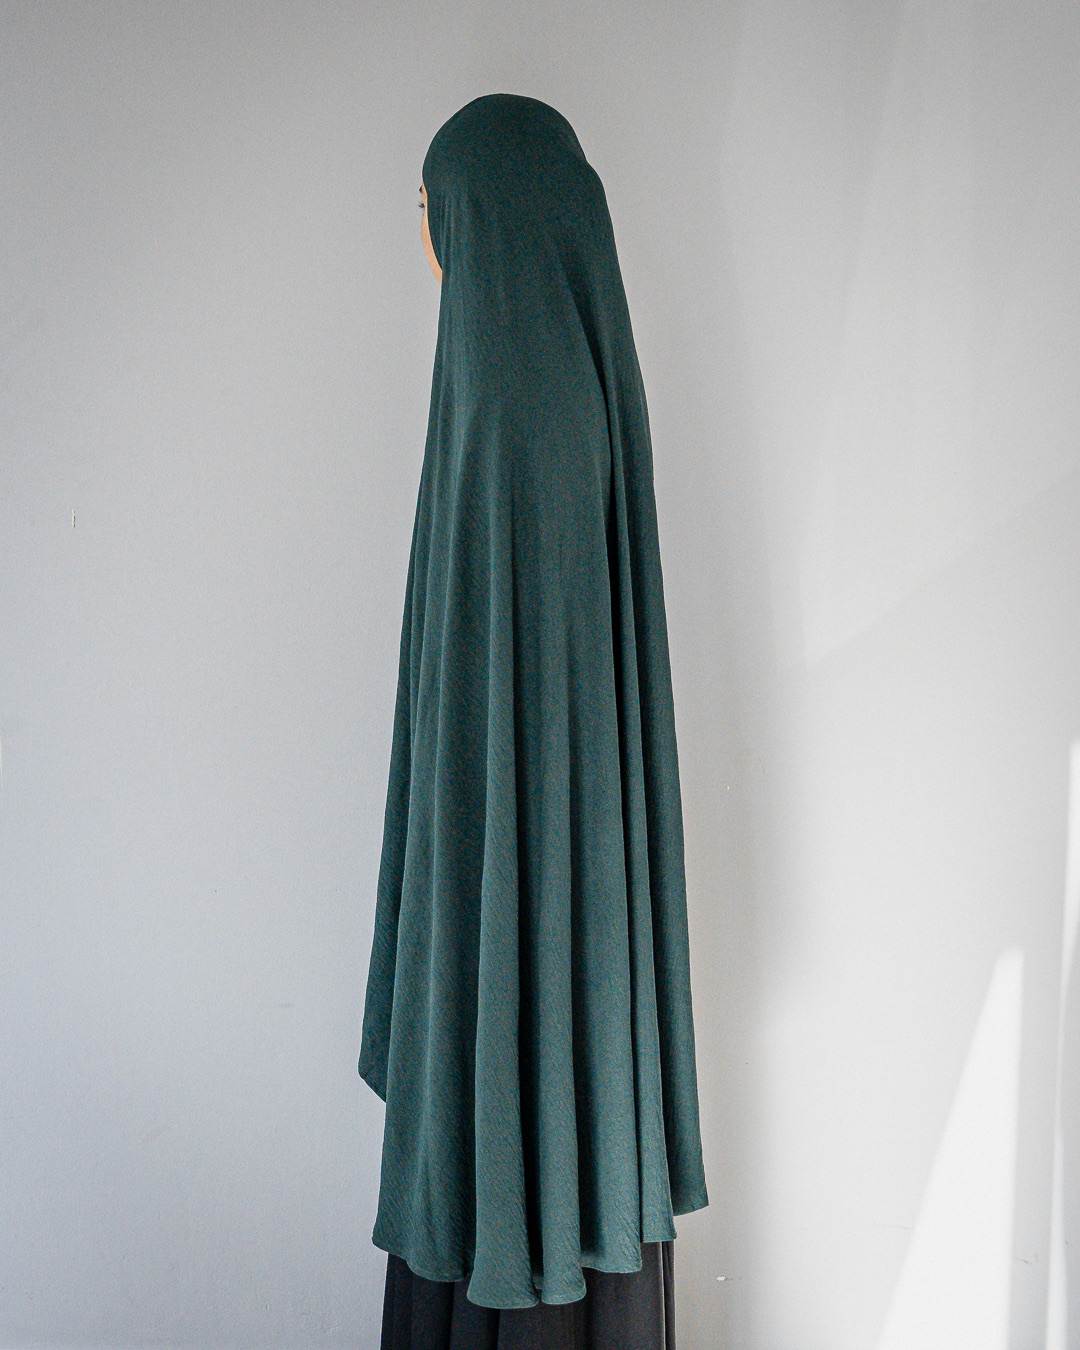 Medium Length Burqa